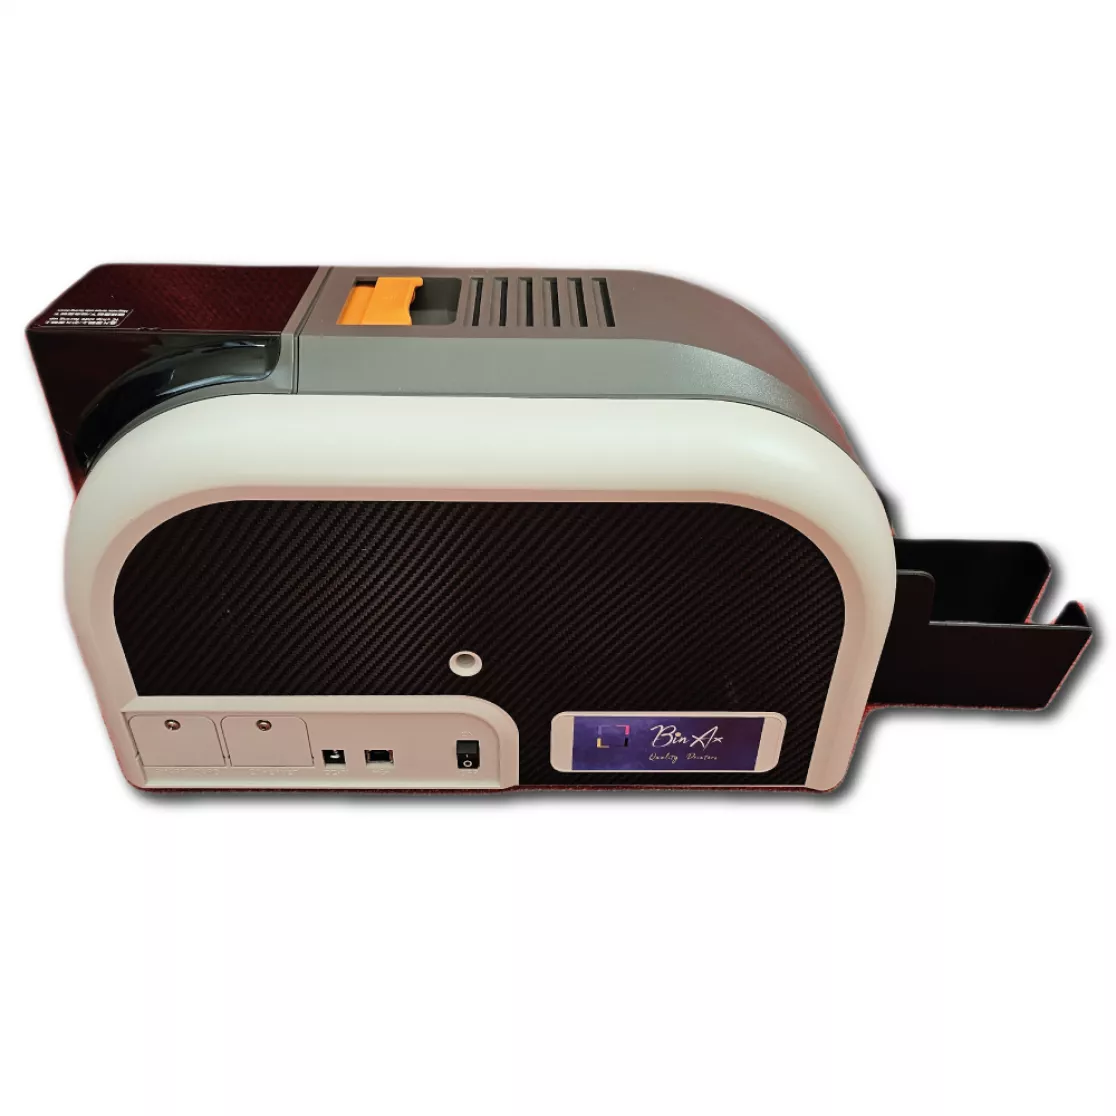 BinAx 300 Card Printer